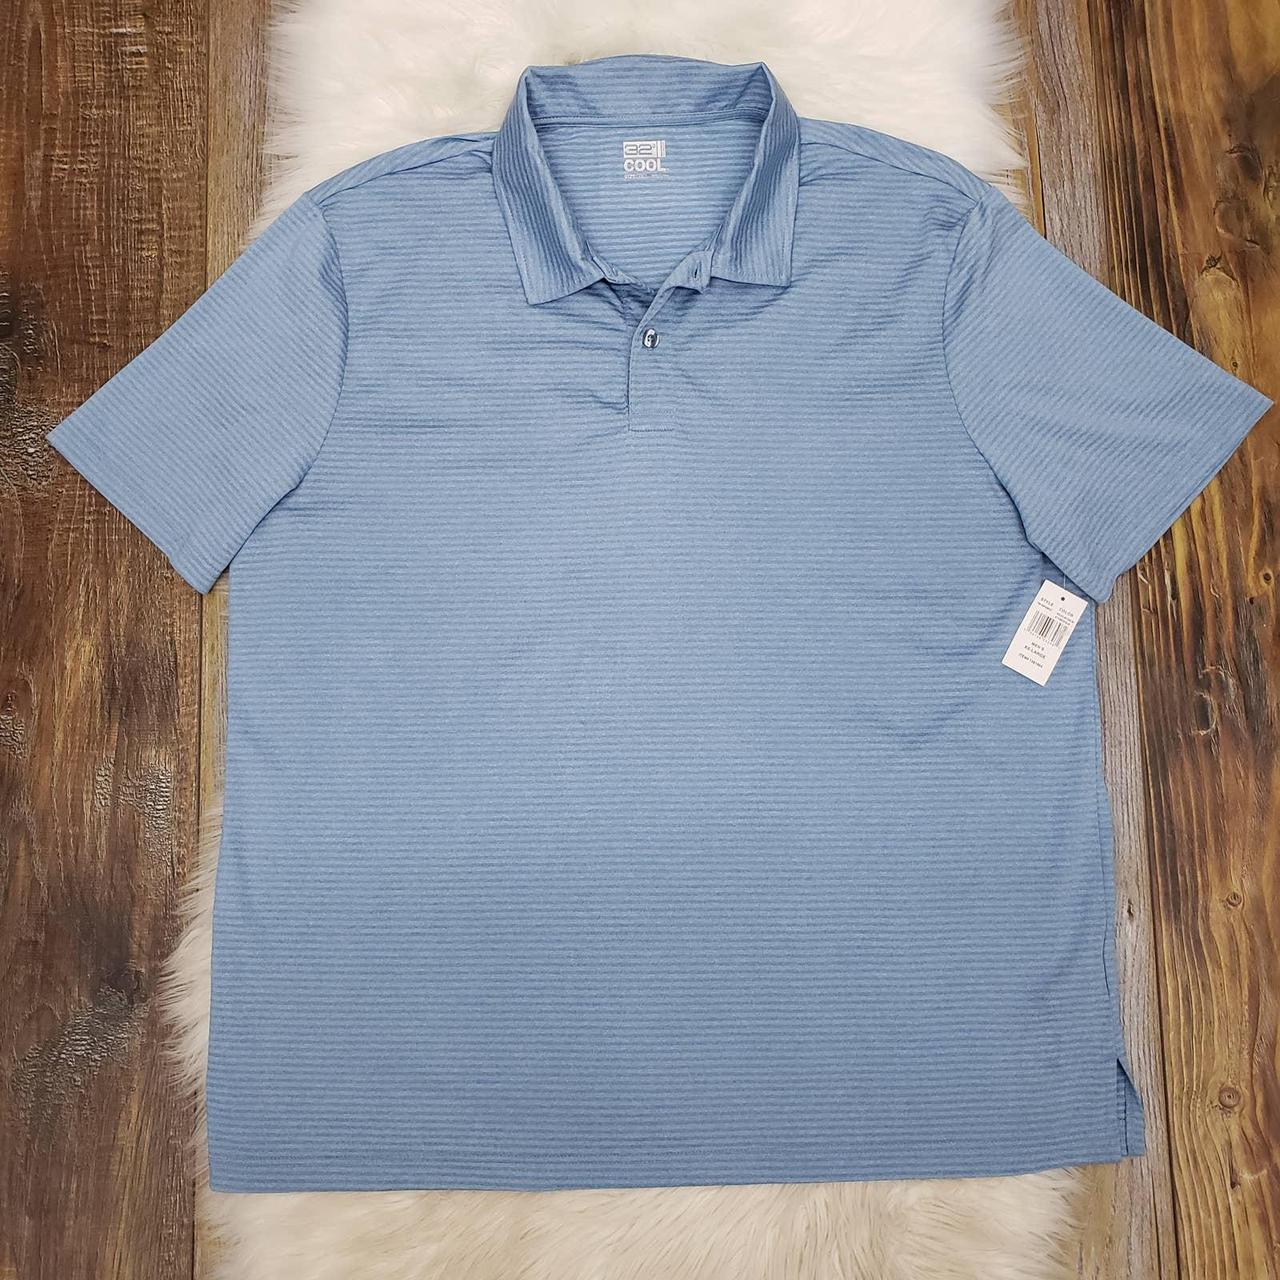 32 DEGREES Cool Polo Shirt Blue Striped Moisture... - Depop